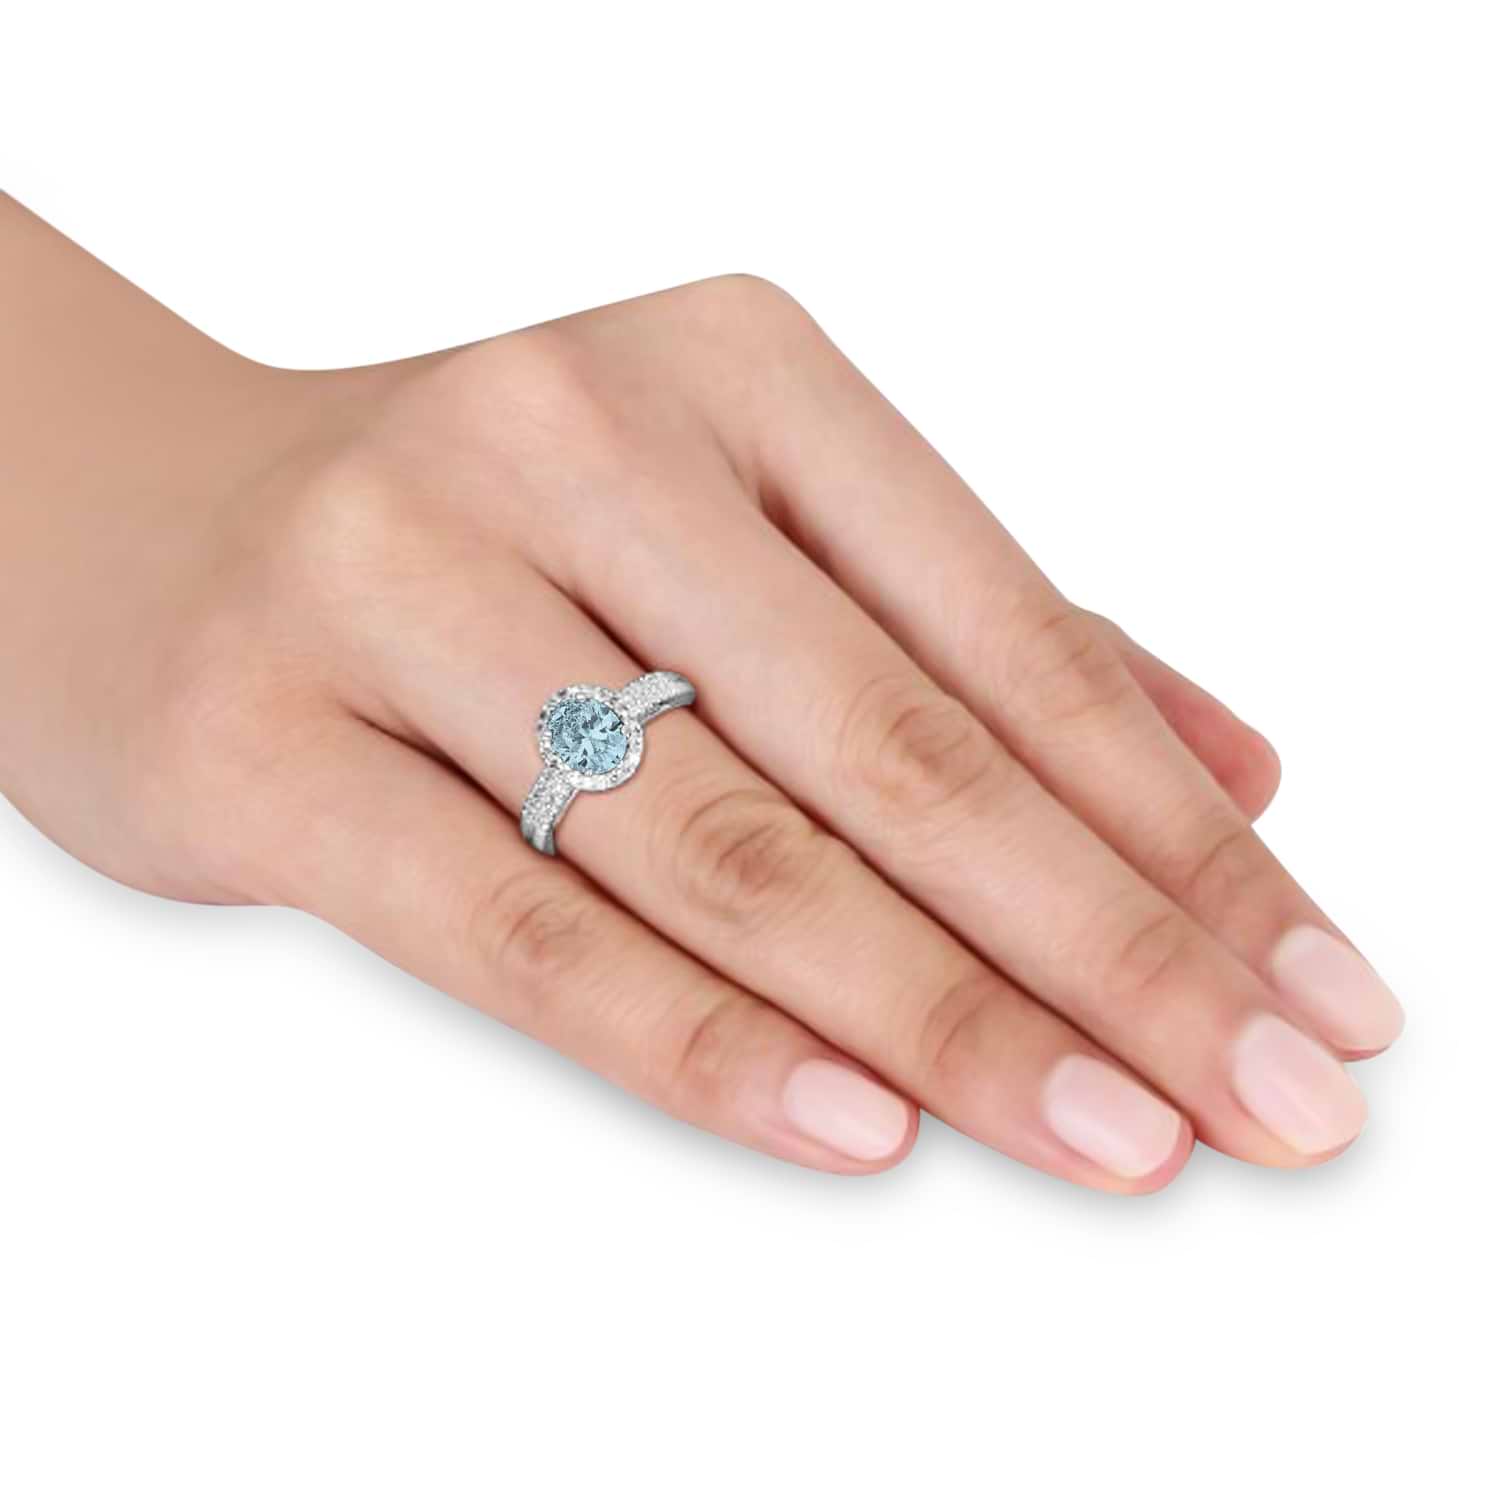 Aquamarine & Diamond Oval Engagement Ring 14k White Gold (1.01ct)